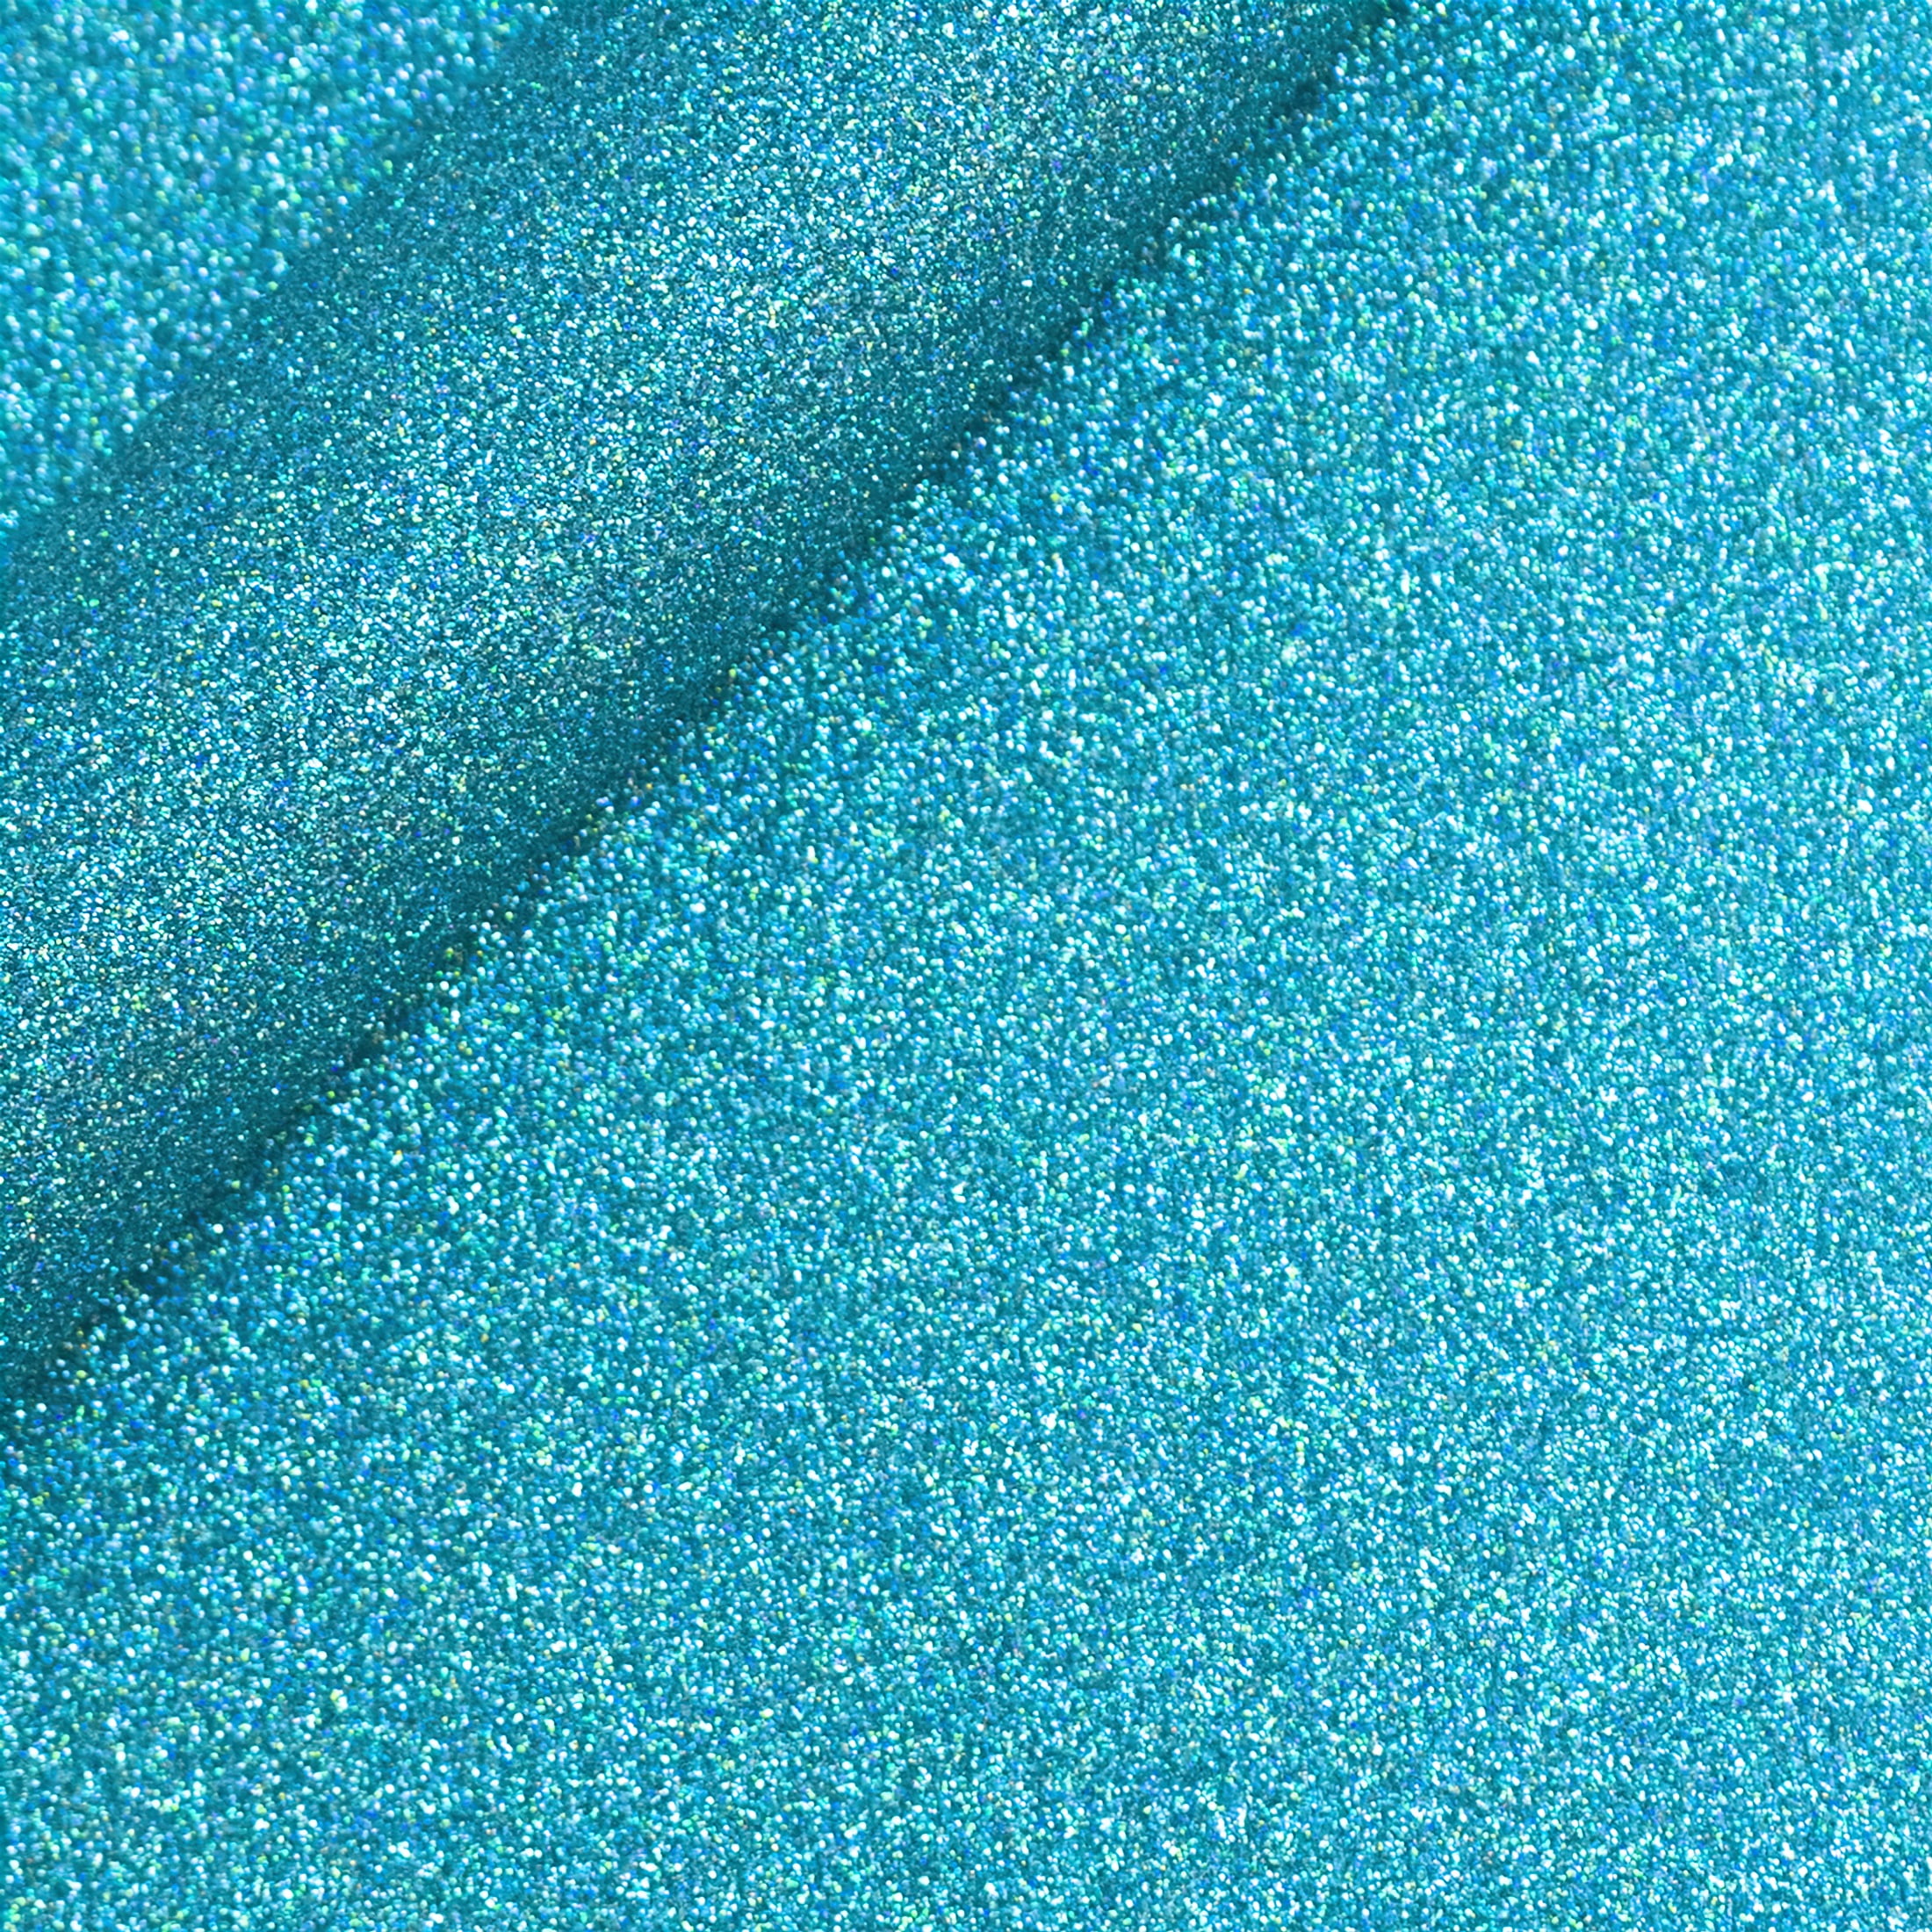 Siser (HTV Glitter) Mermaid Blue – Whales Tail Quilt Shop